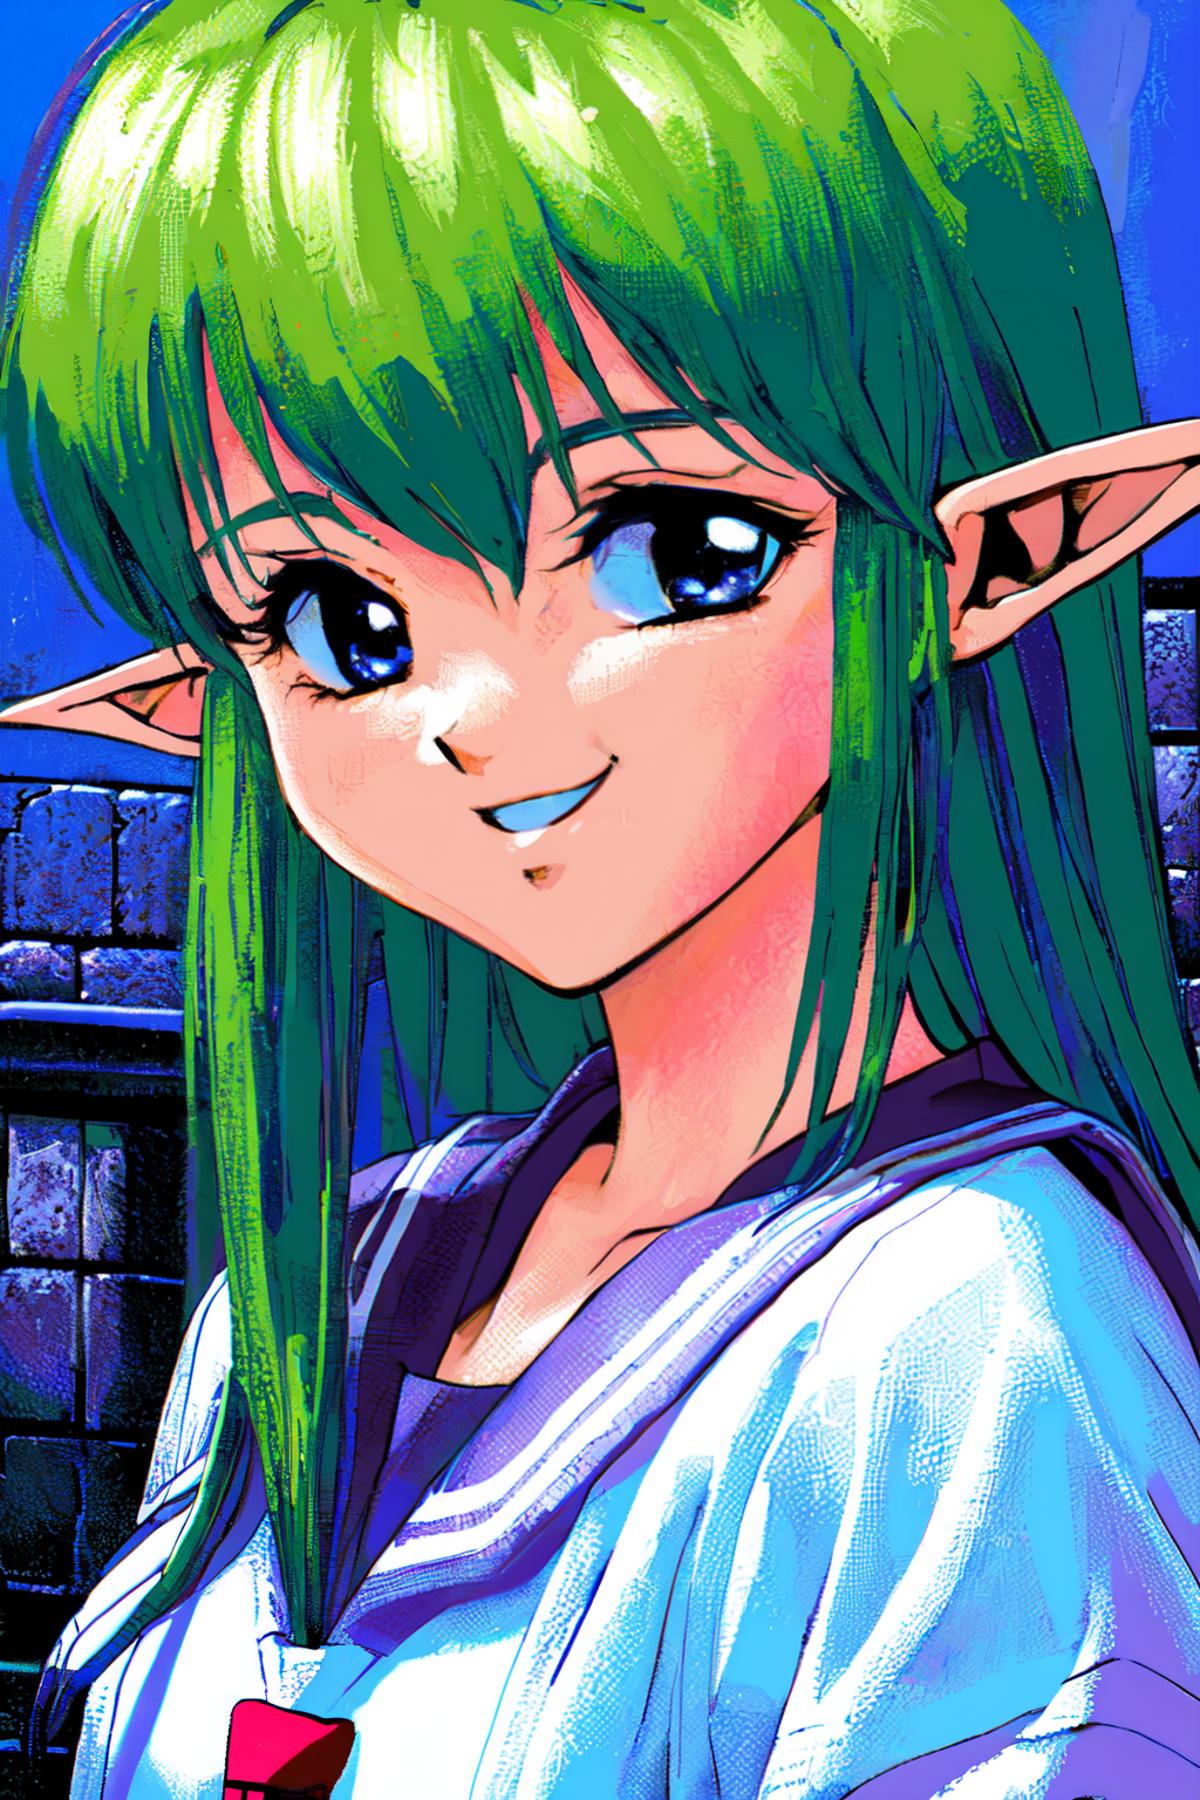 1990's PC game style image by kokurine